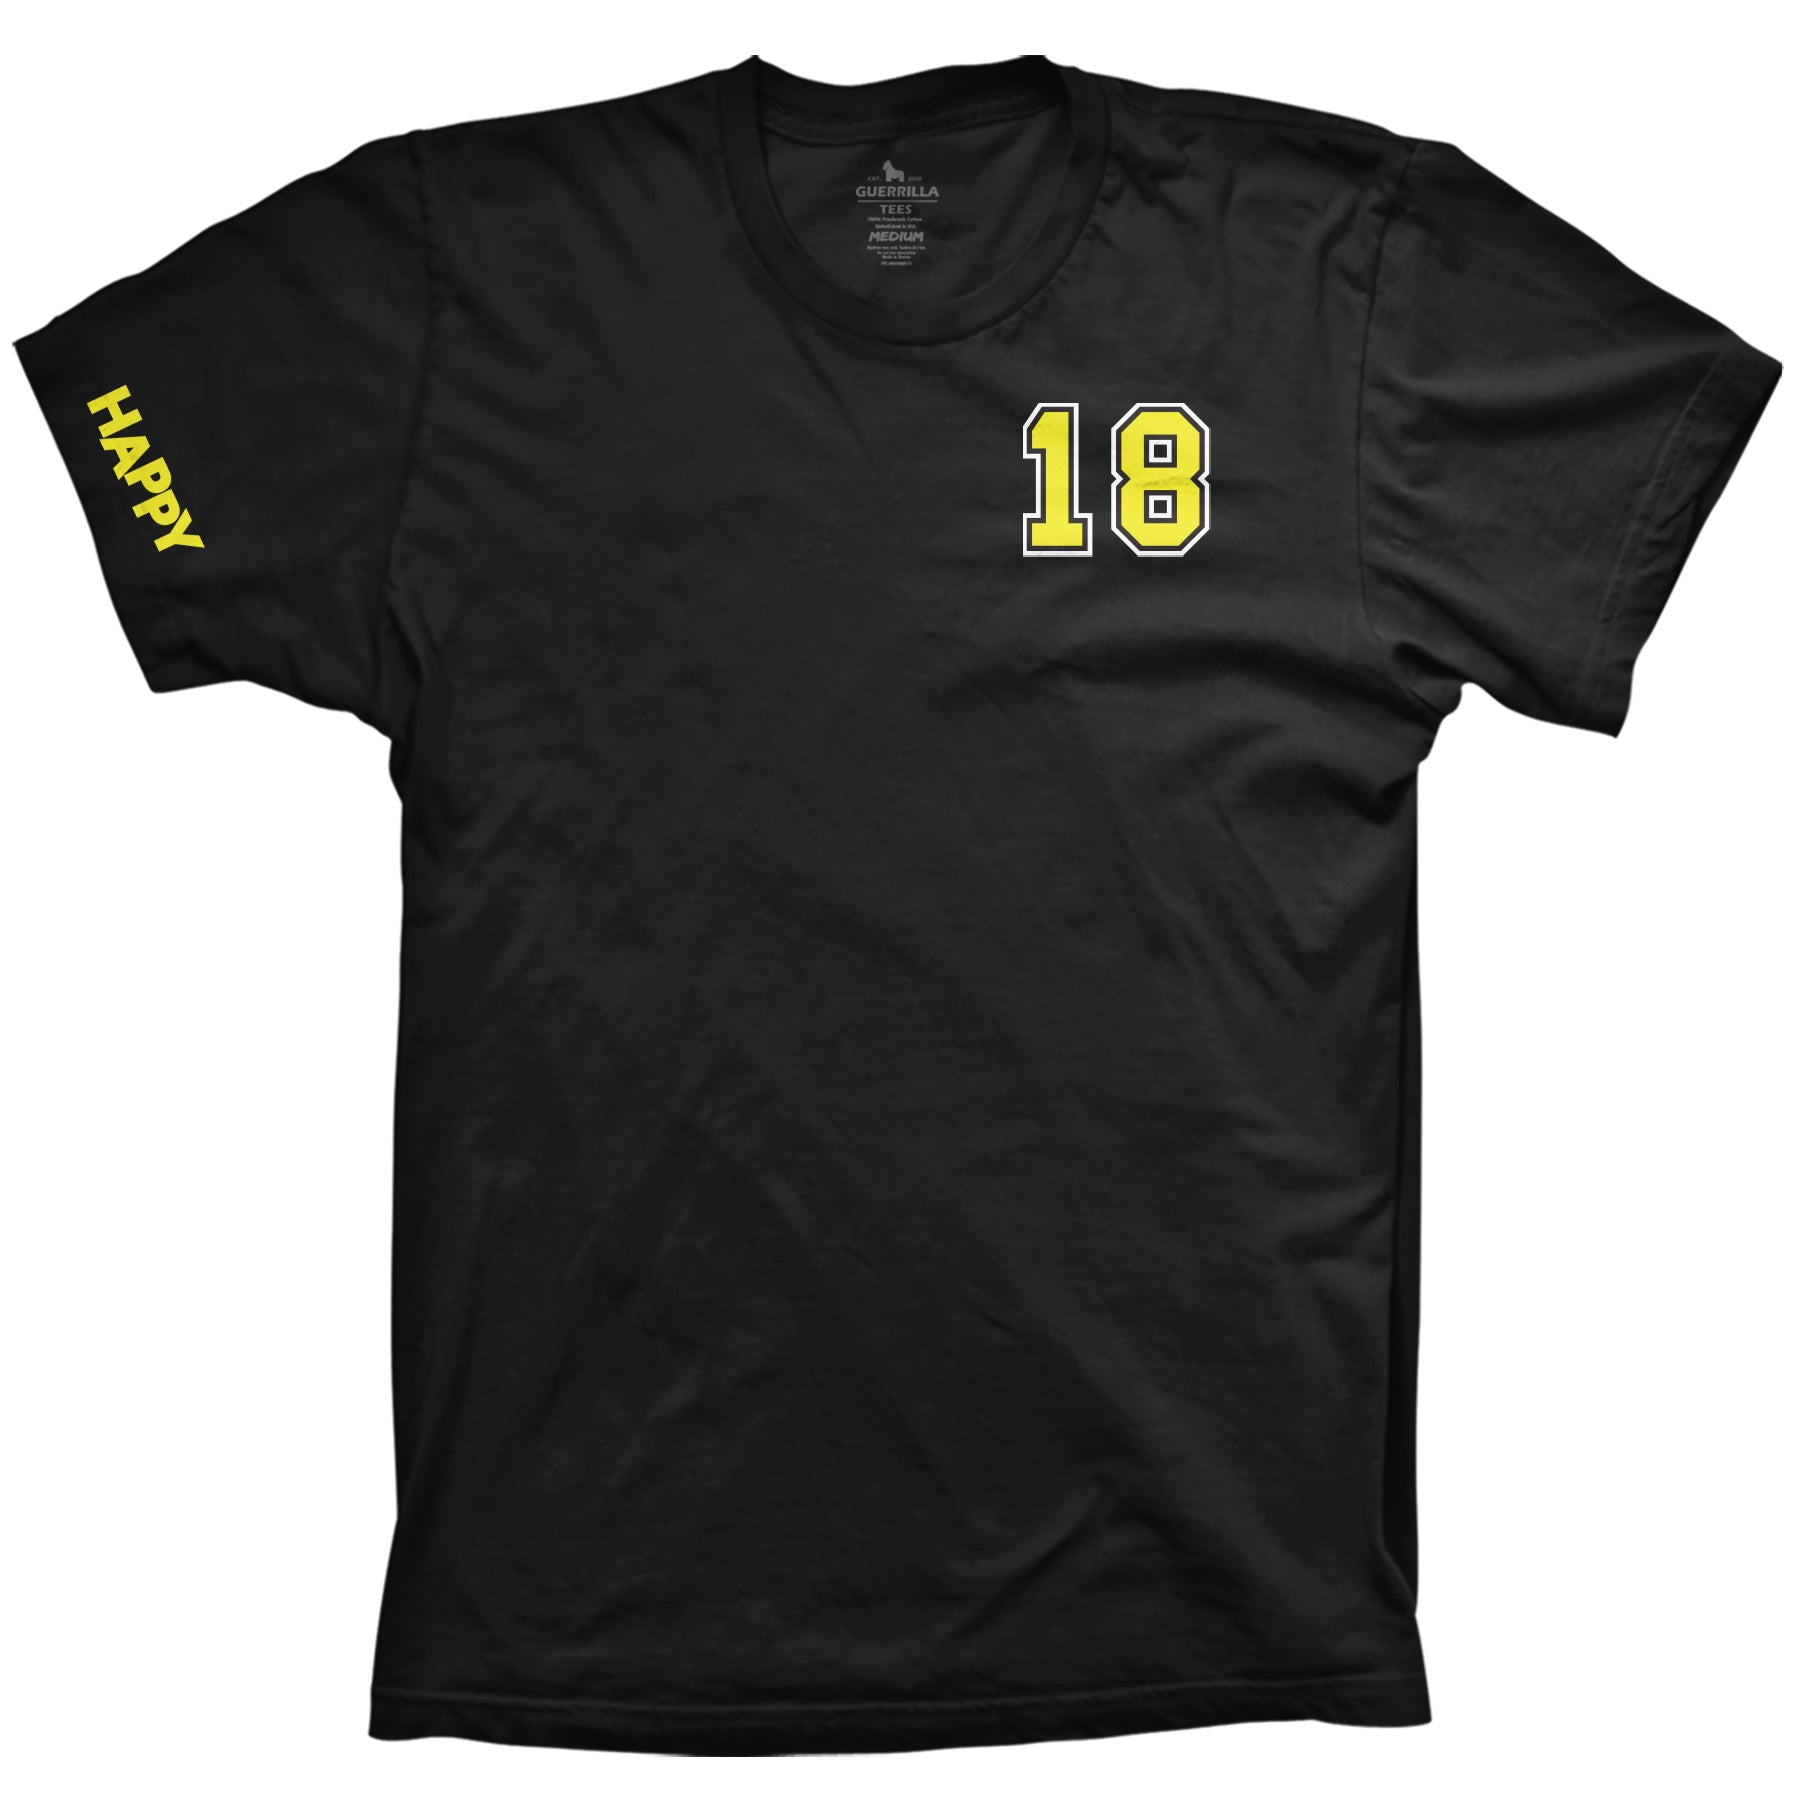 Gilmore T-Shirt